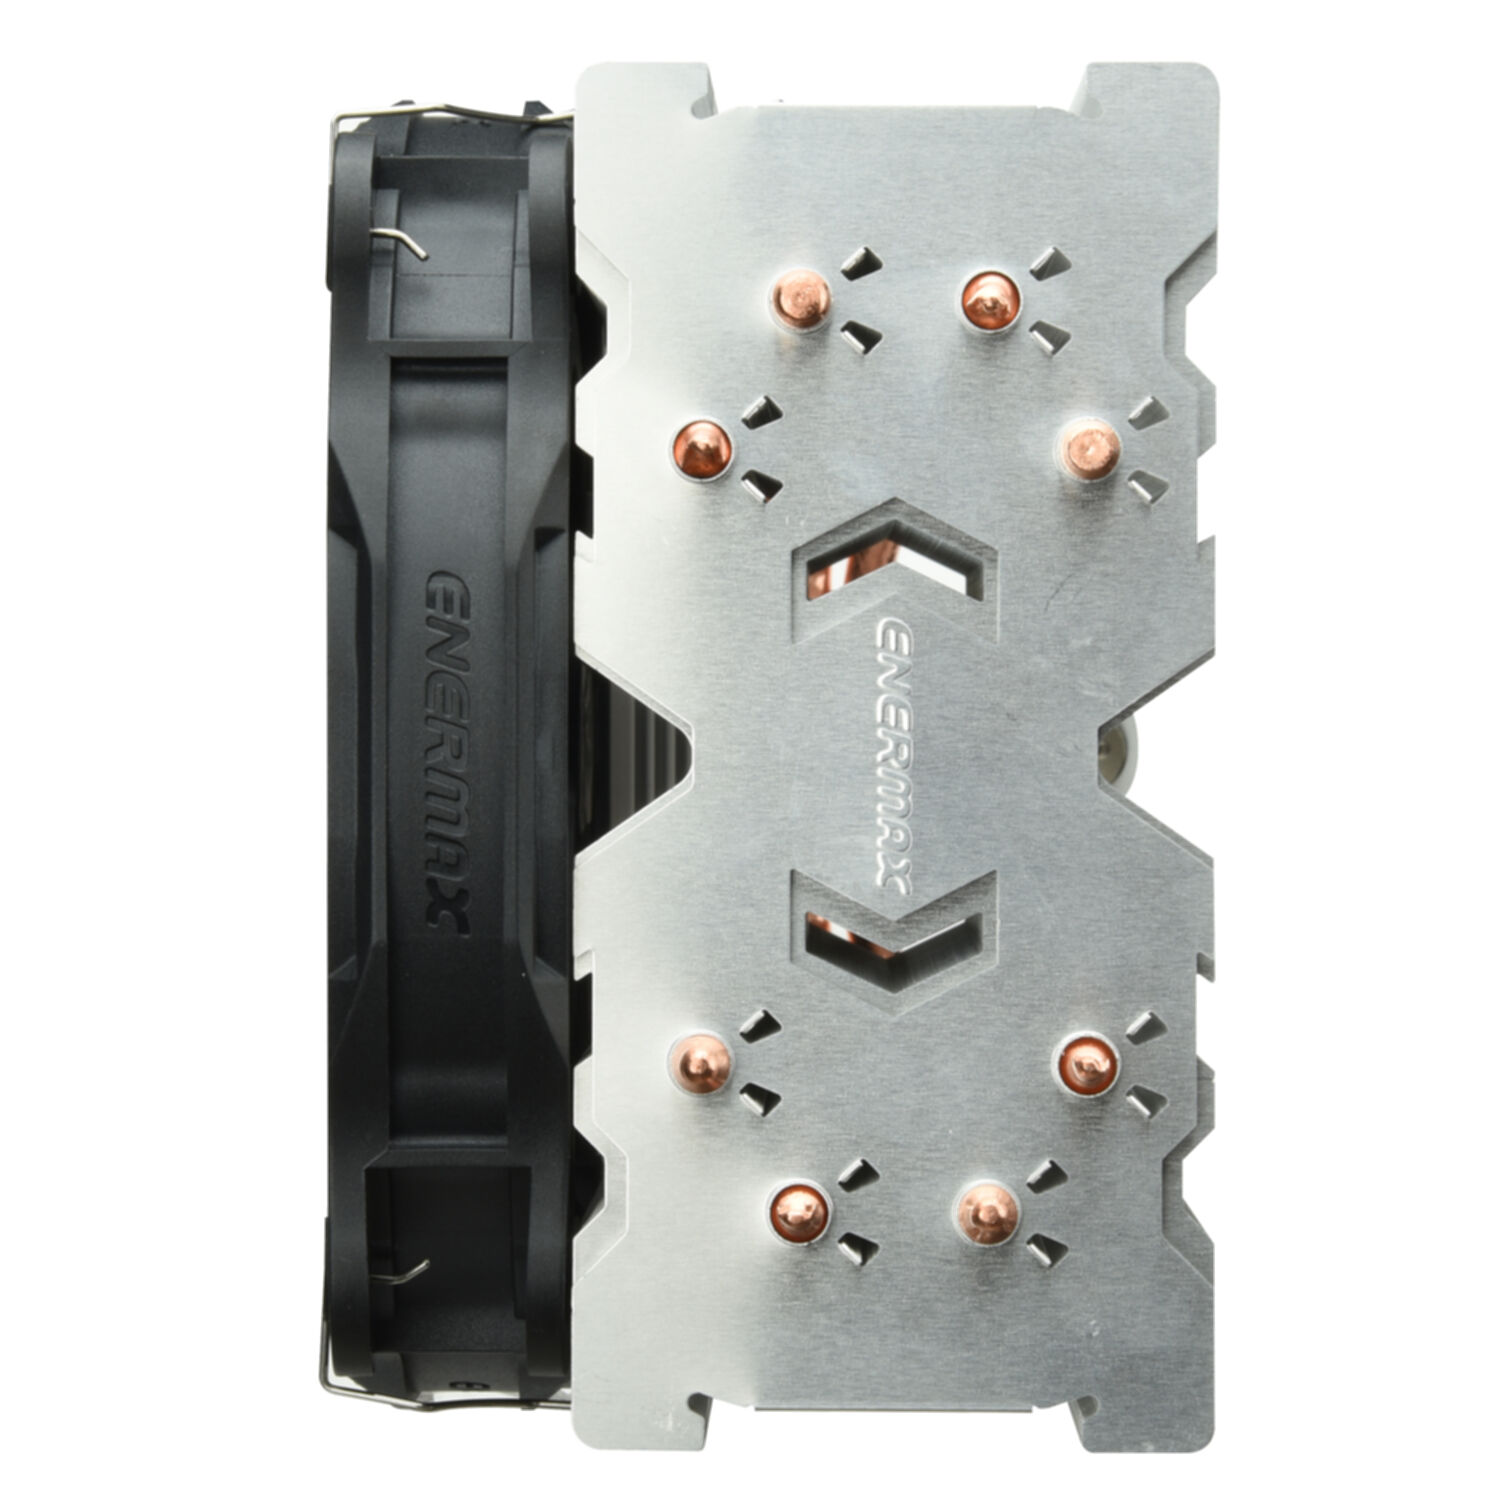 ENERMAX ETS-F40-FS CPU Kühler, Schwarz Aluminium